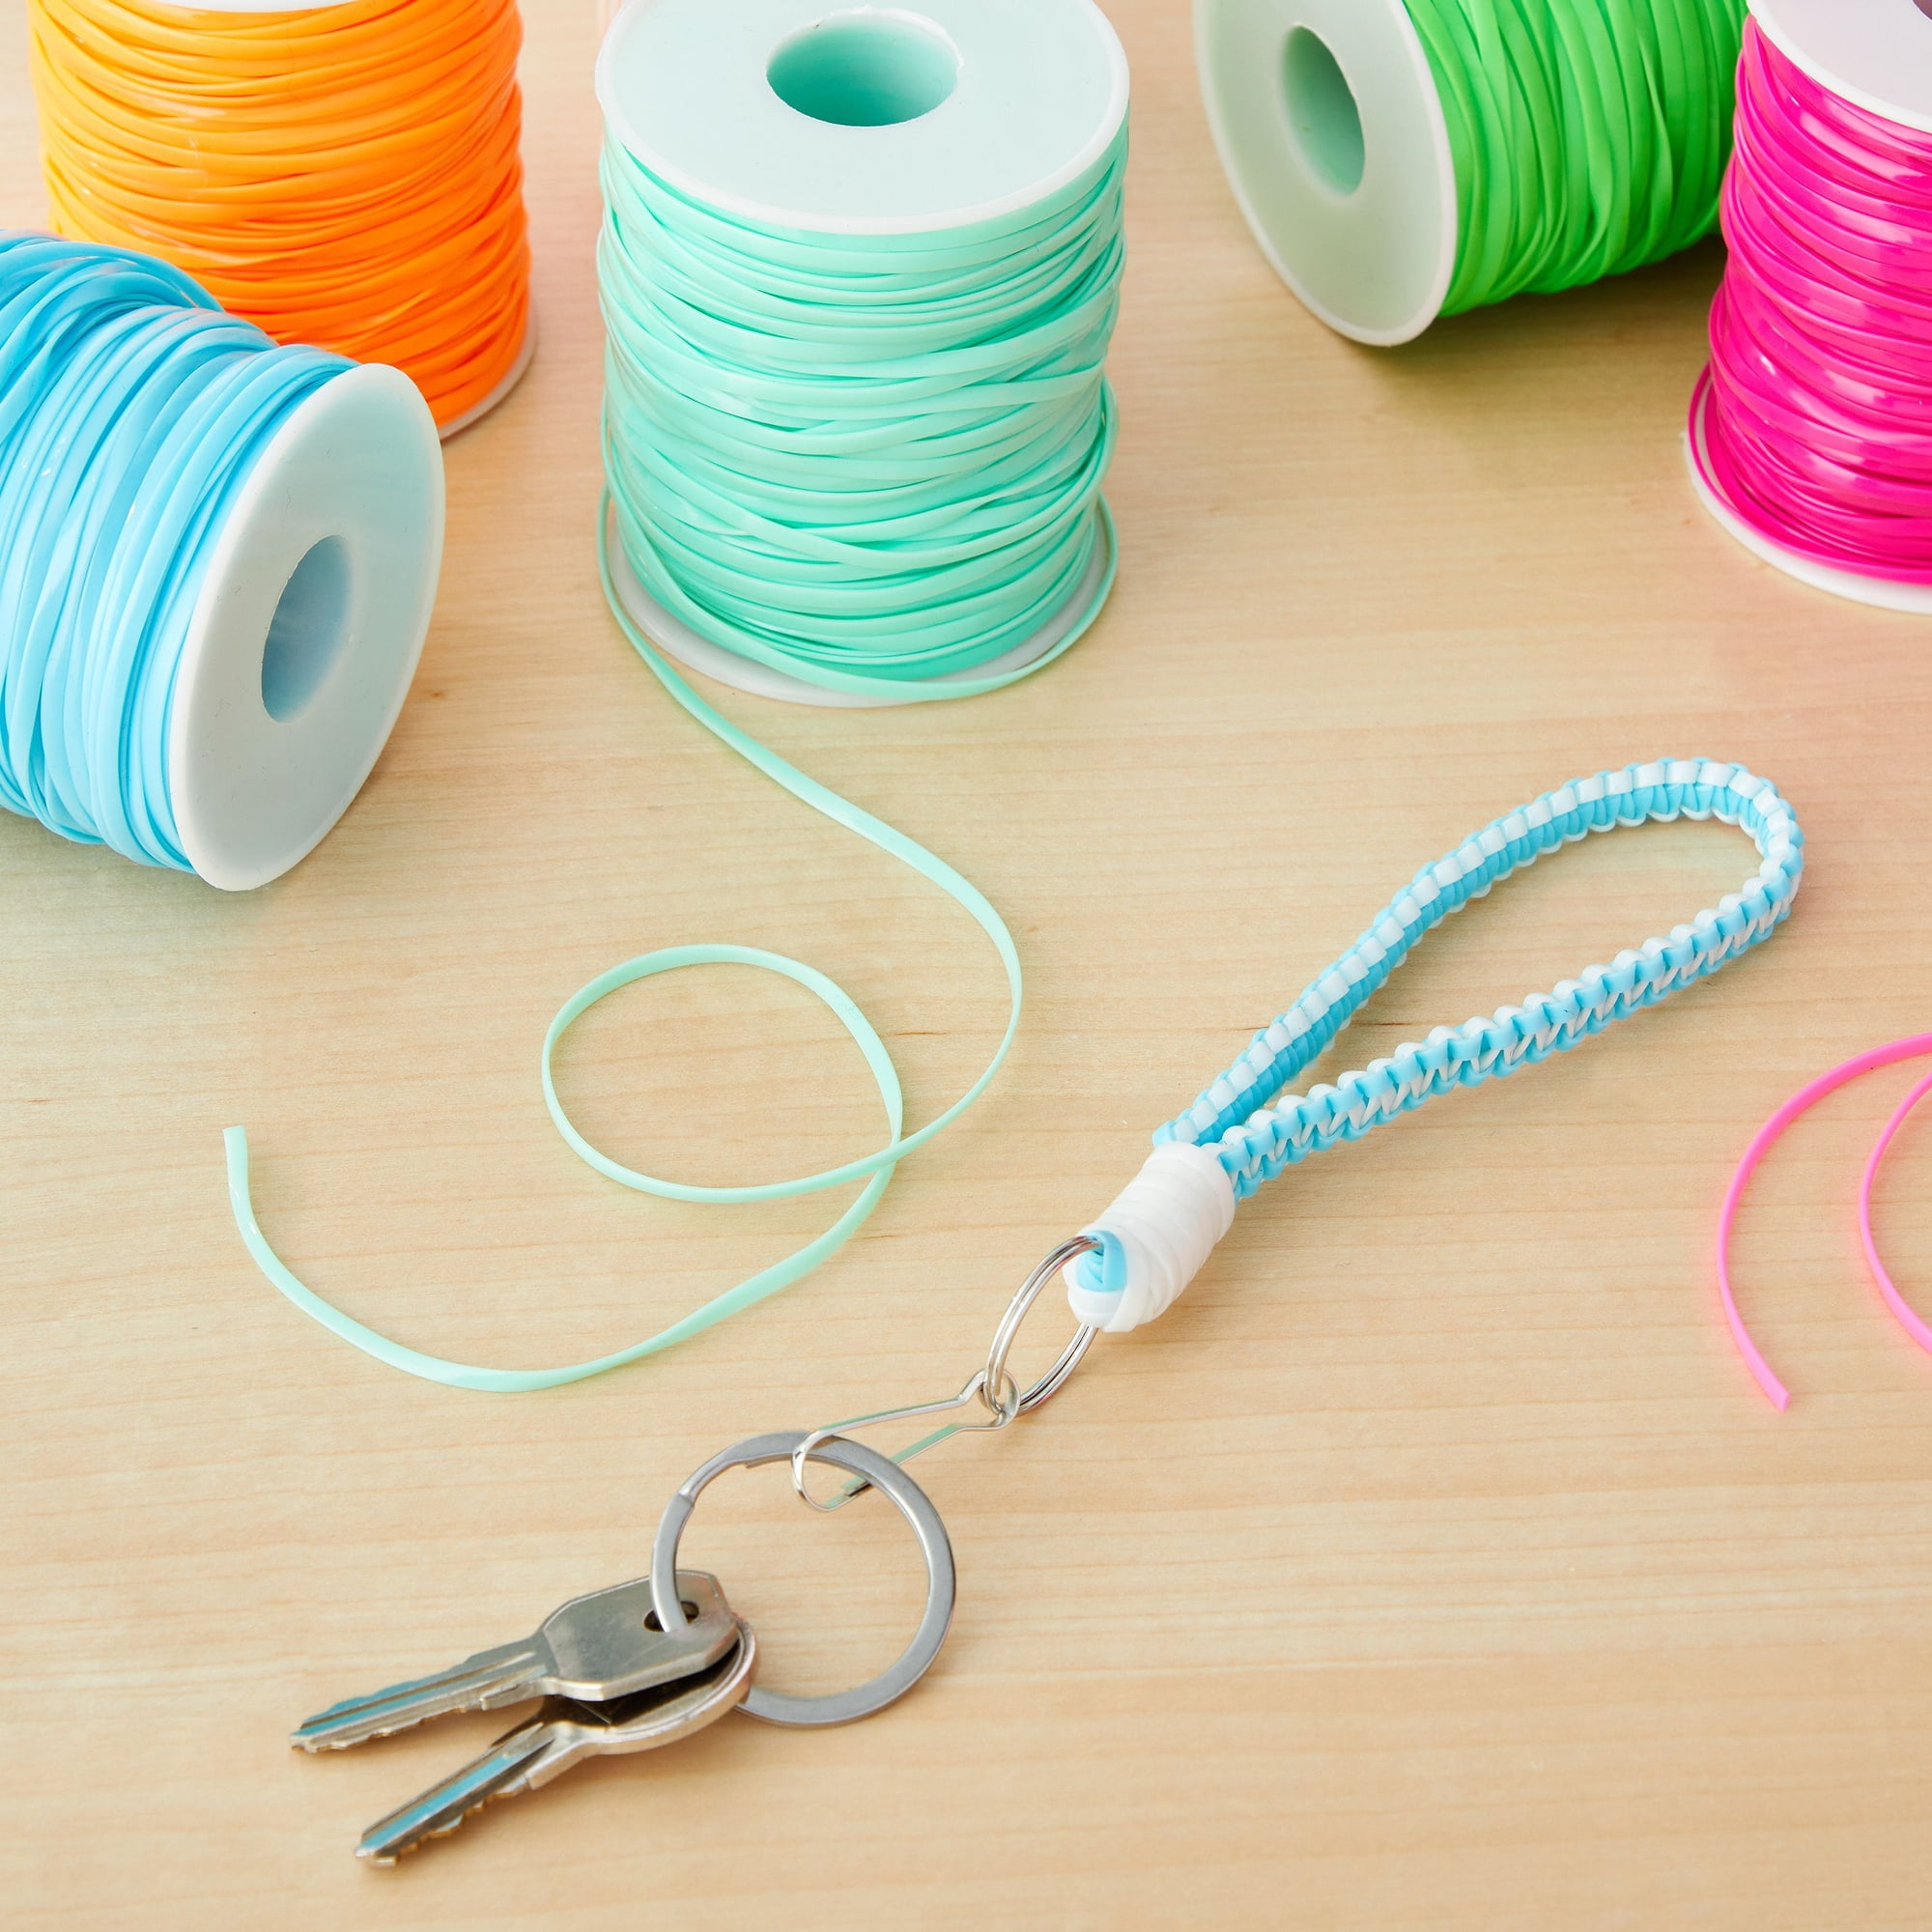  Mandala Crafts Plastic Lacing Cord Boondoggle String Kit - 1000  Yds Gimp String Kit for Keychain Plastic Cord Bracelet Necklace Jewelry  Making - Plastic Lanyard String